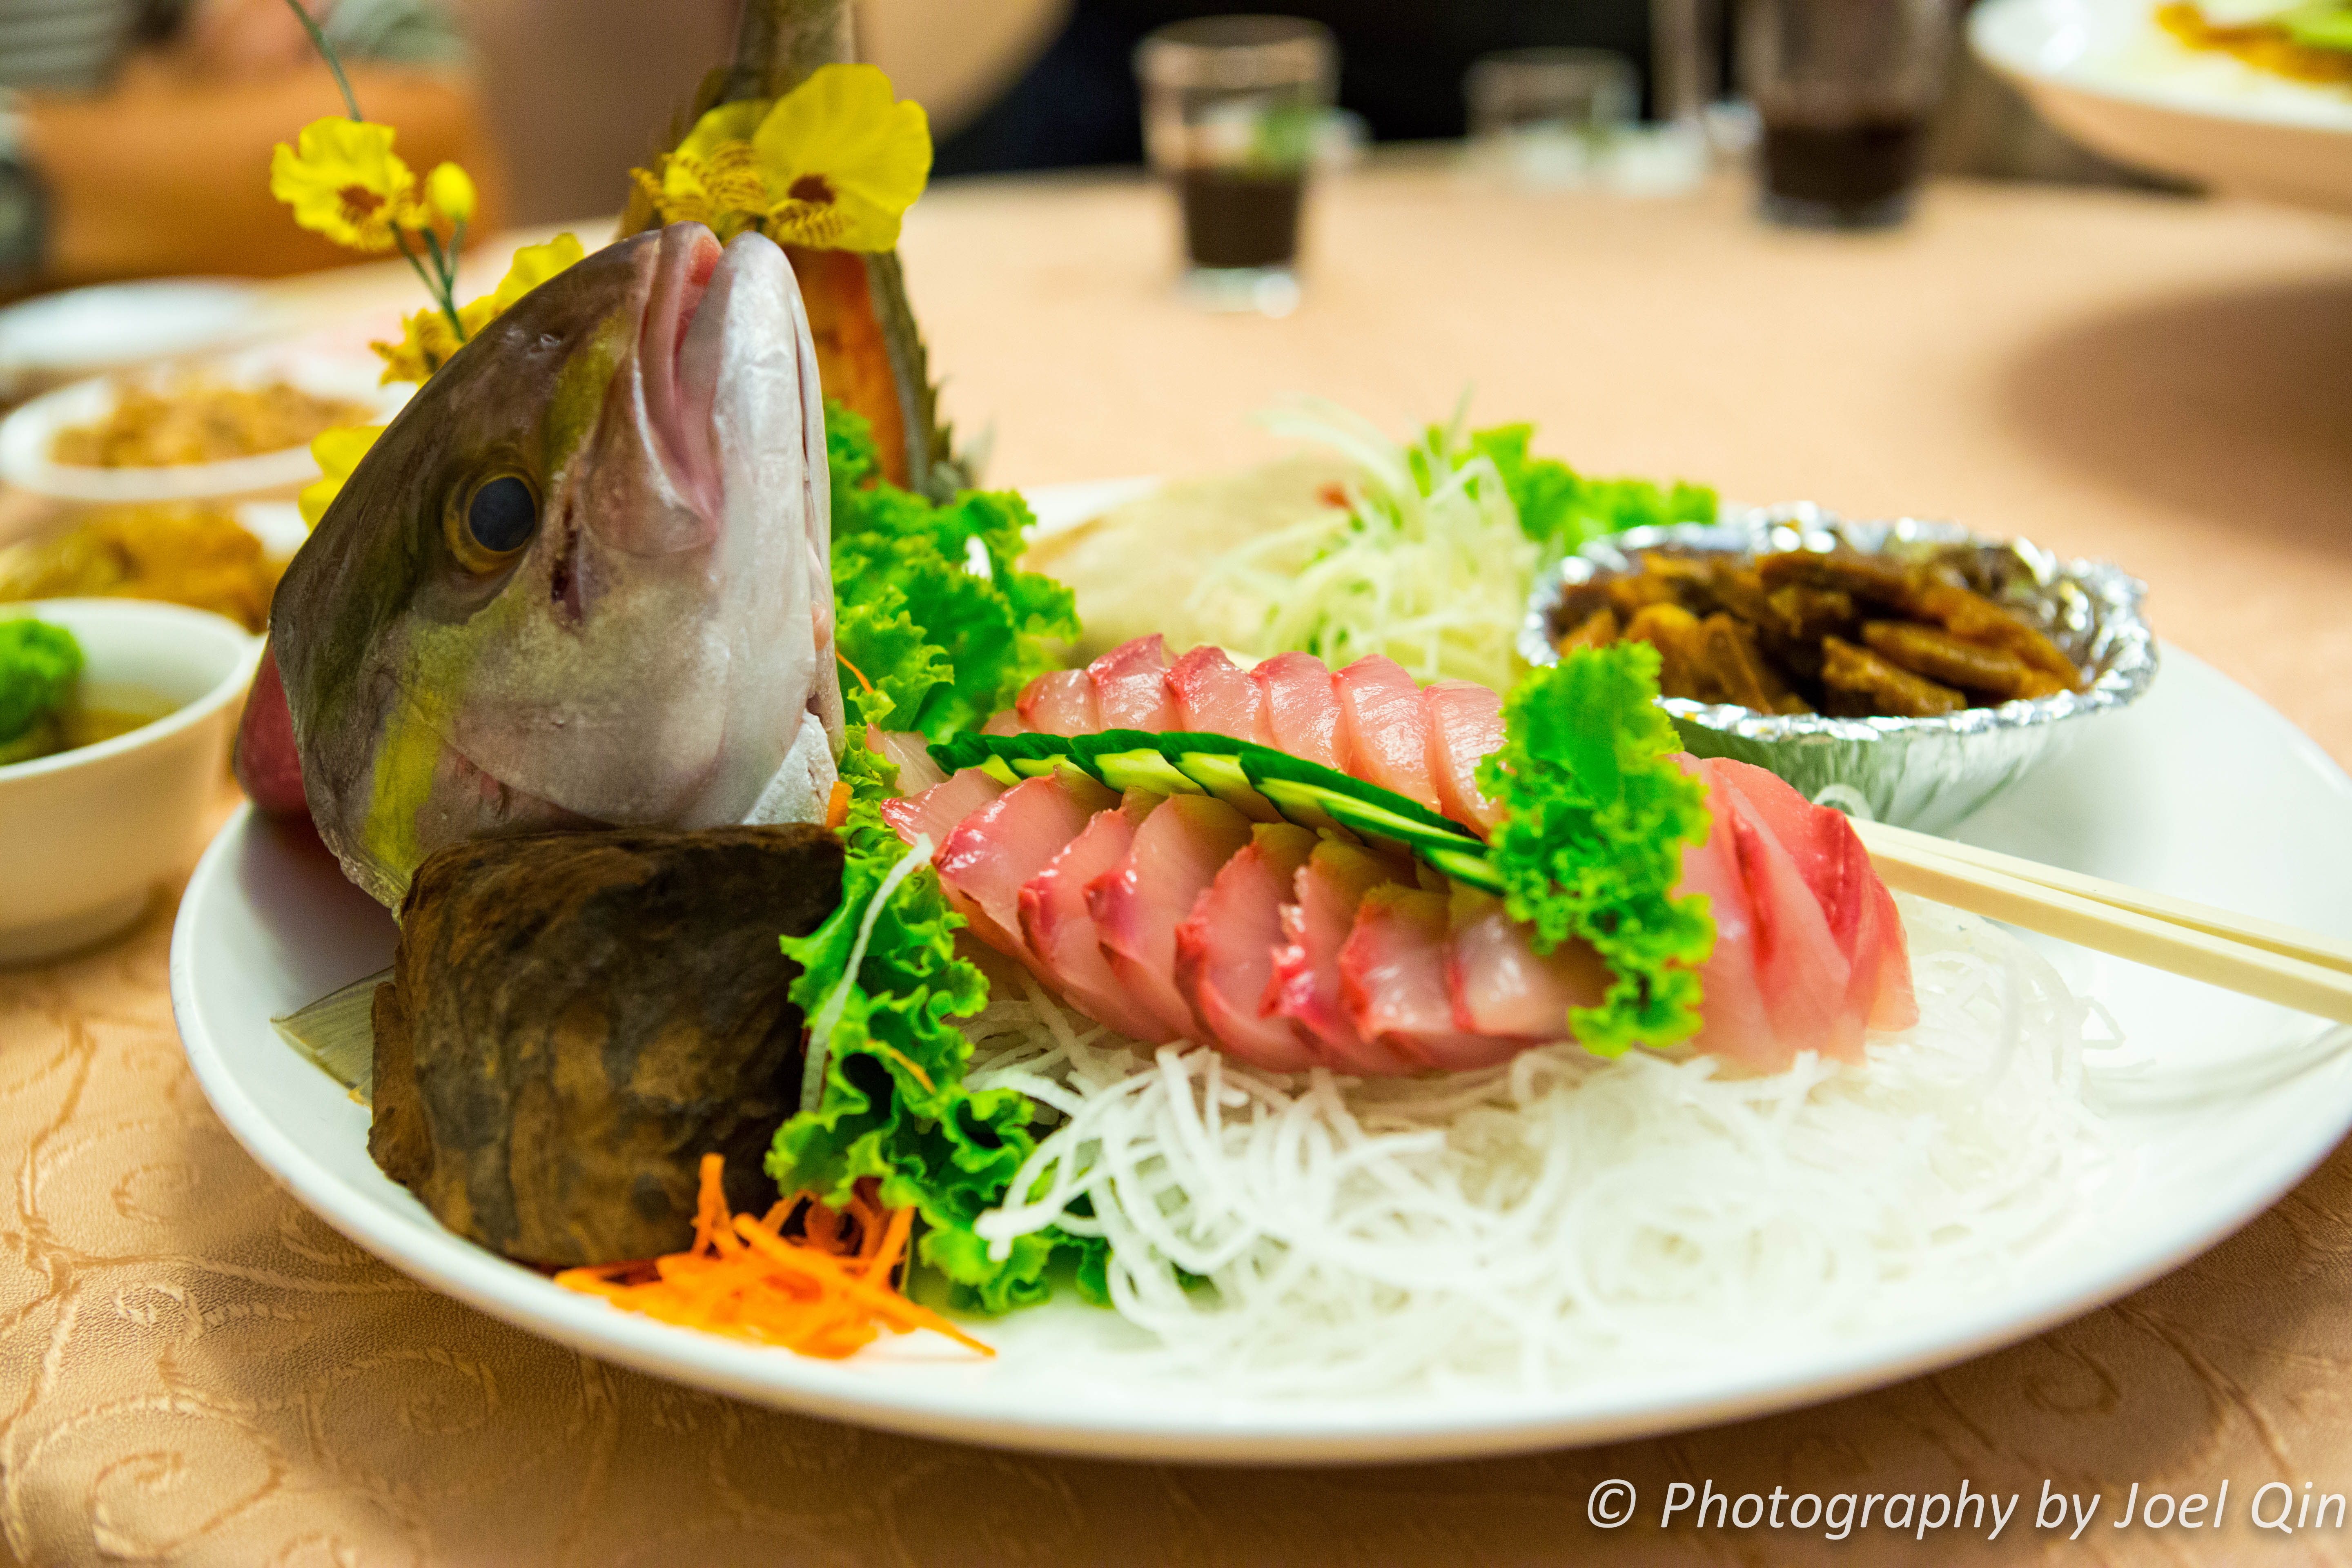 Taipei: Food, Food Galore! – Snap Away